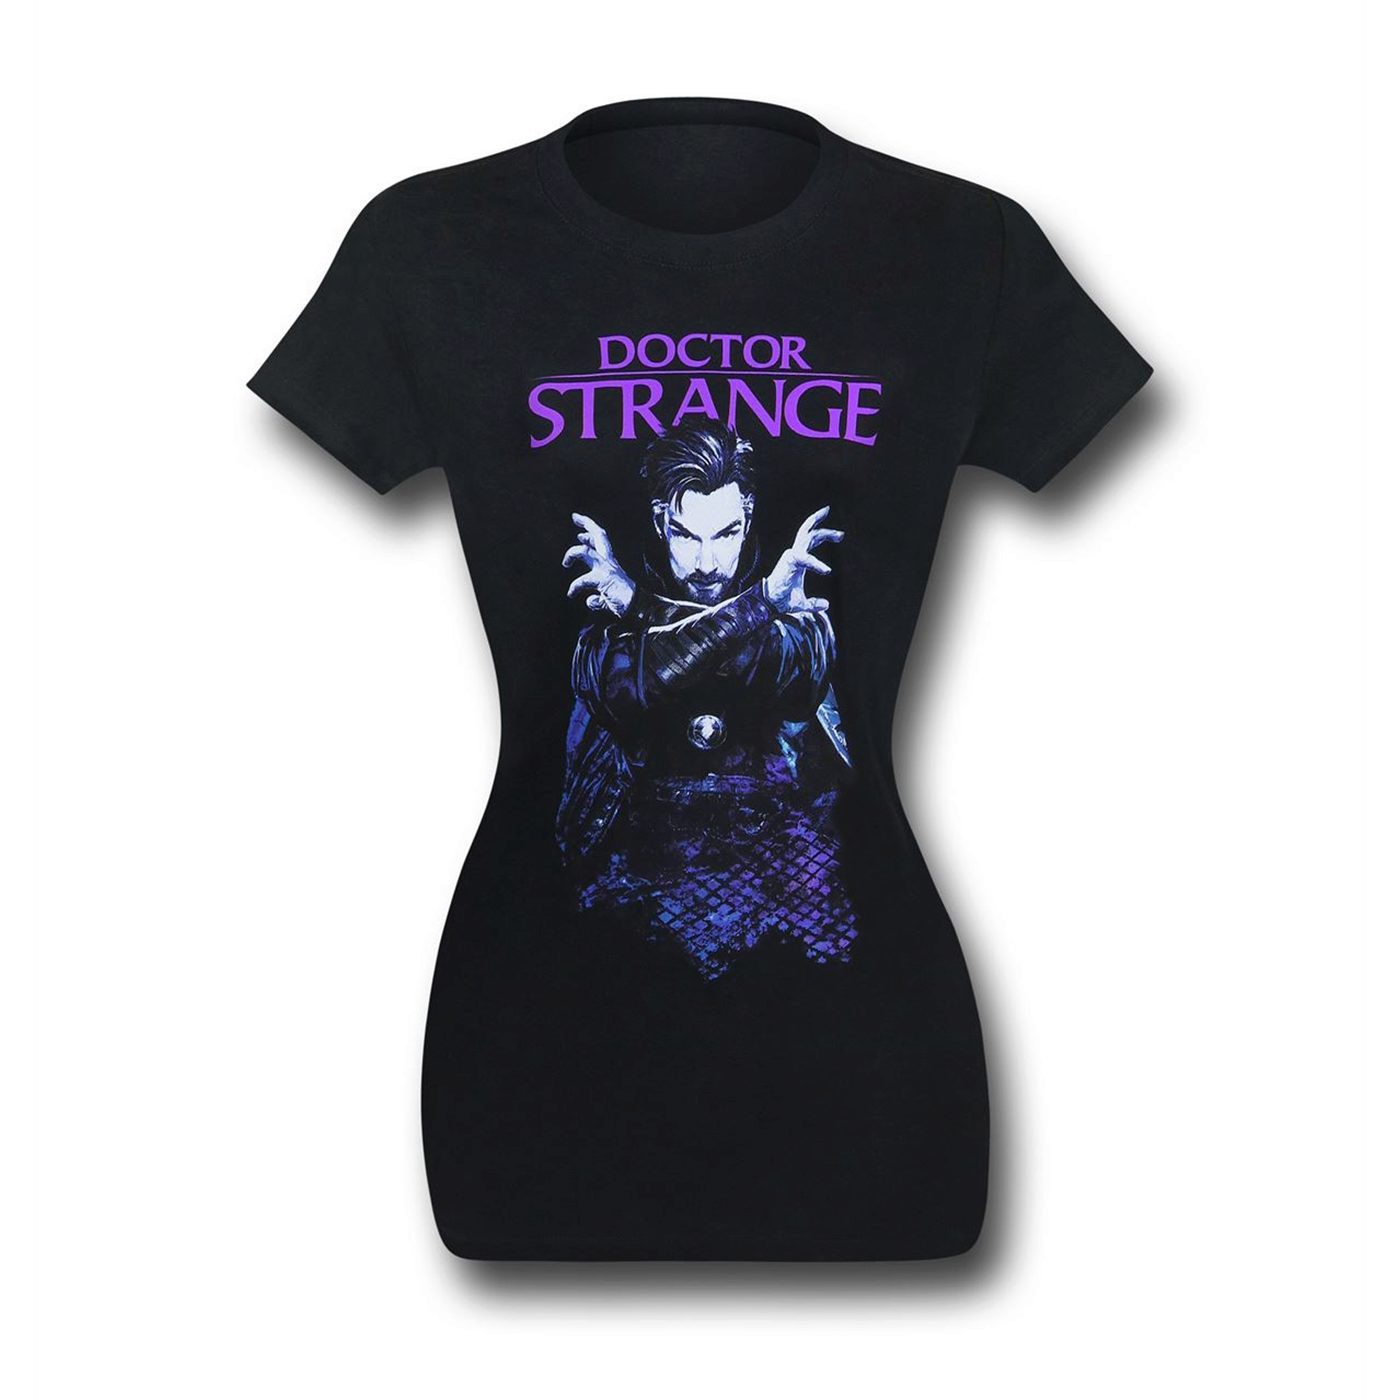 Dr. Strange Movie Image Women's T-Shirt